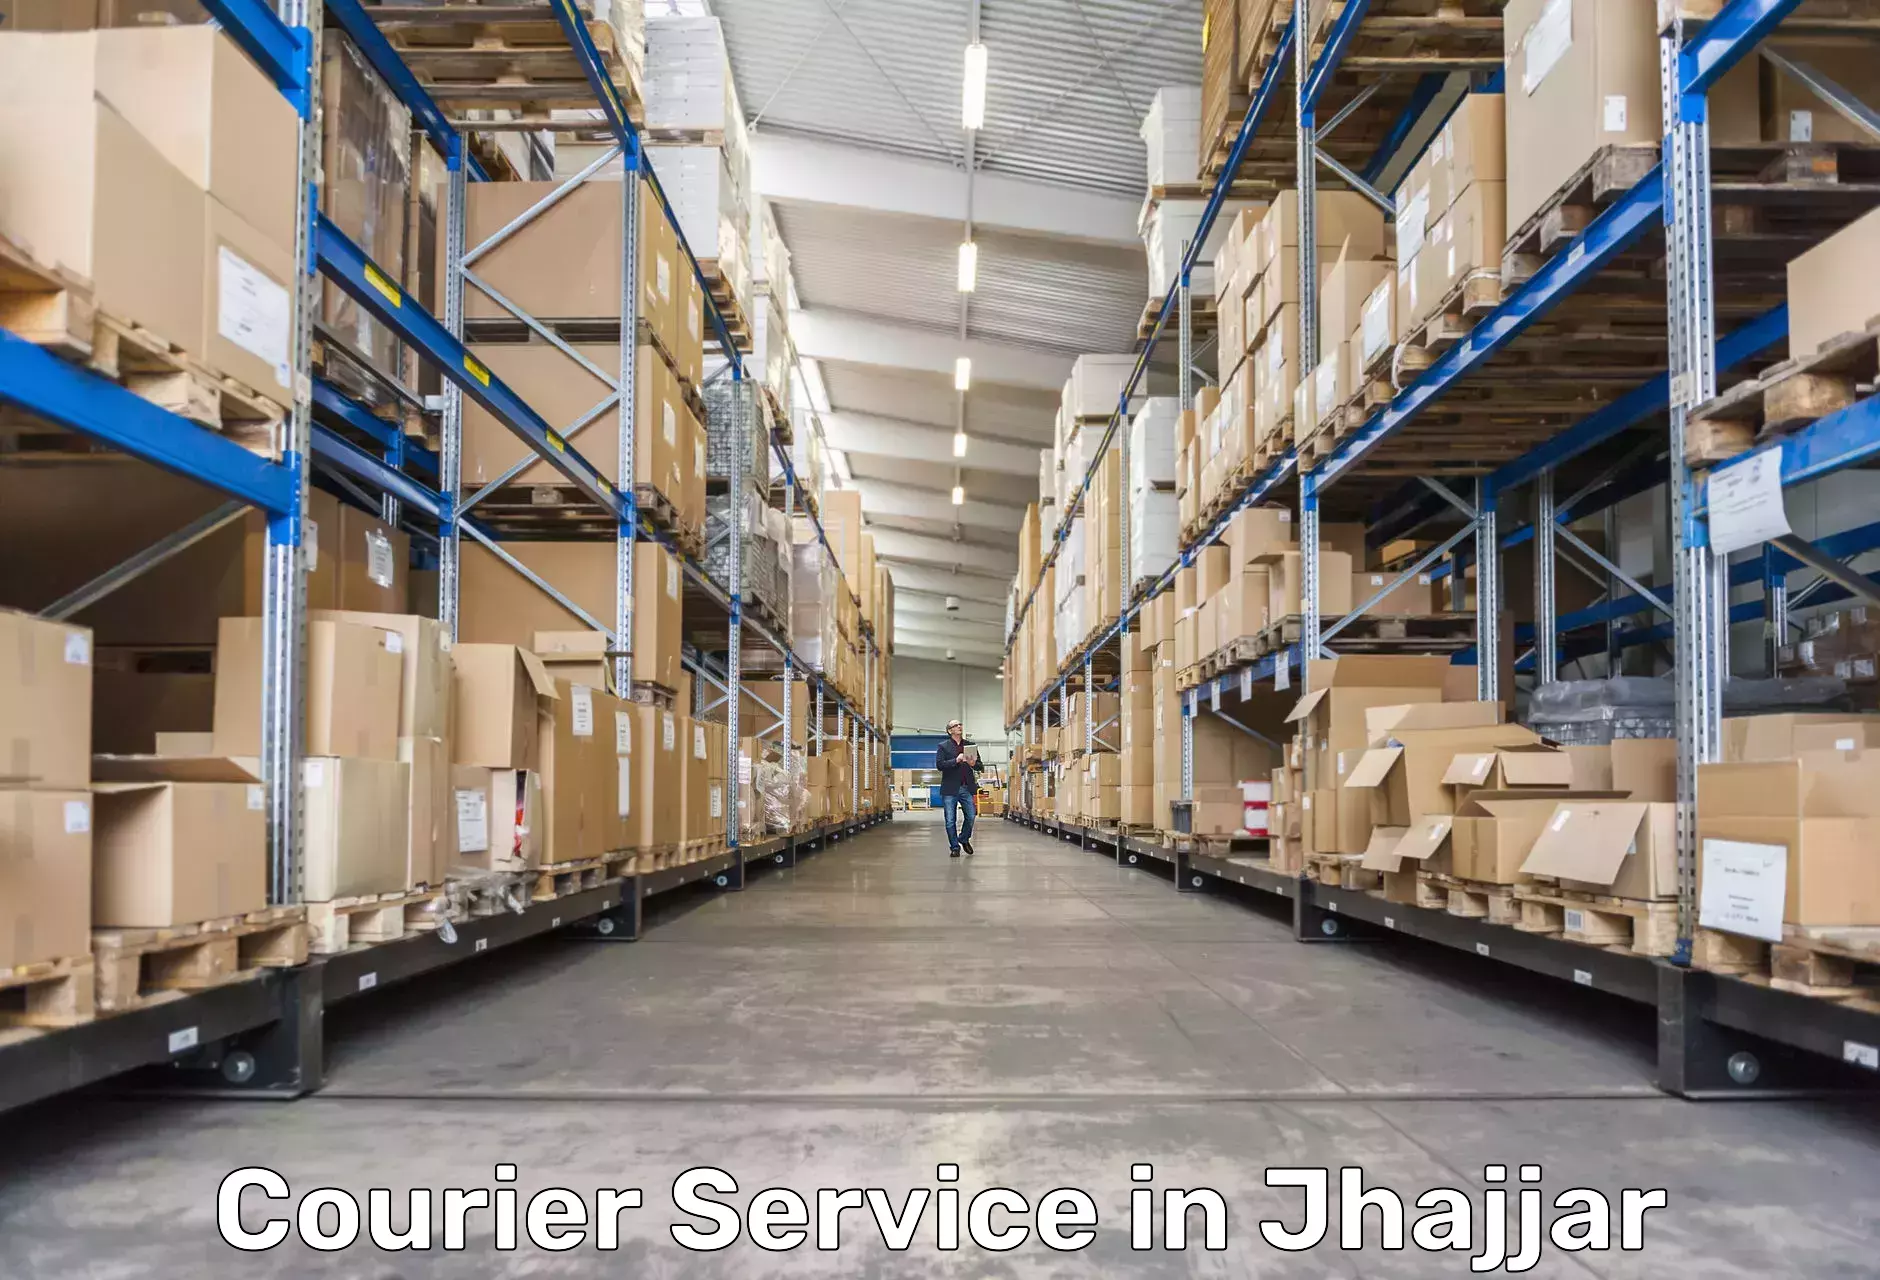 Courier service partnerships in Jhajjar